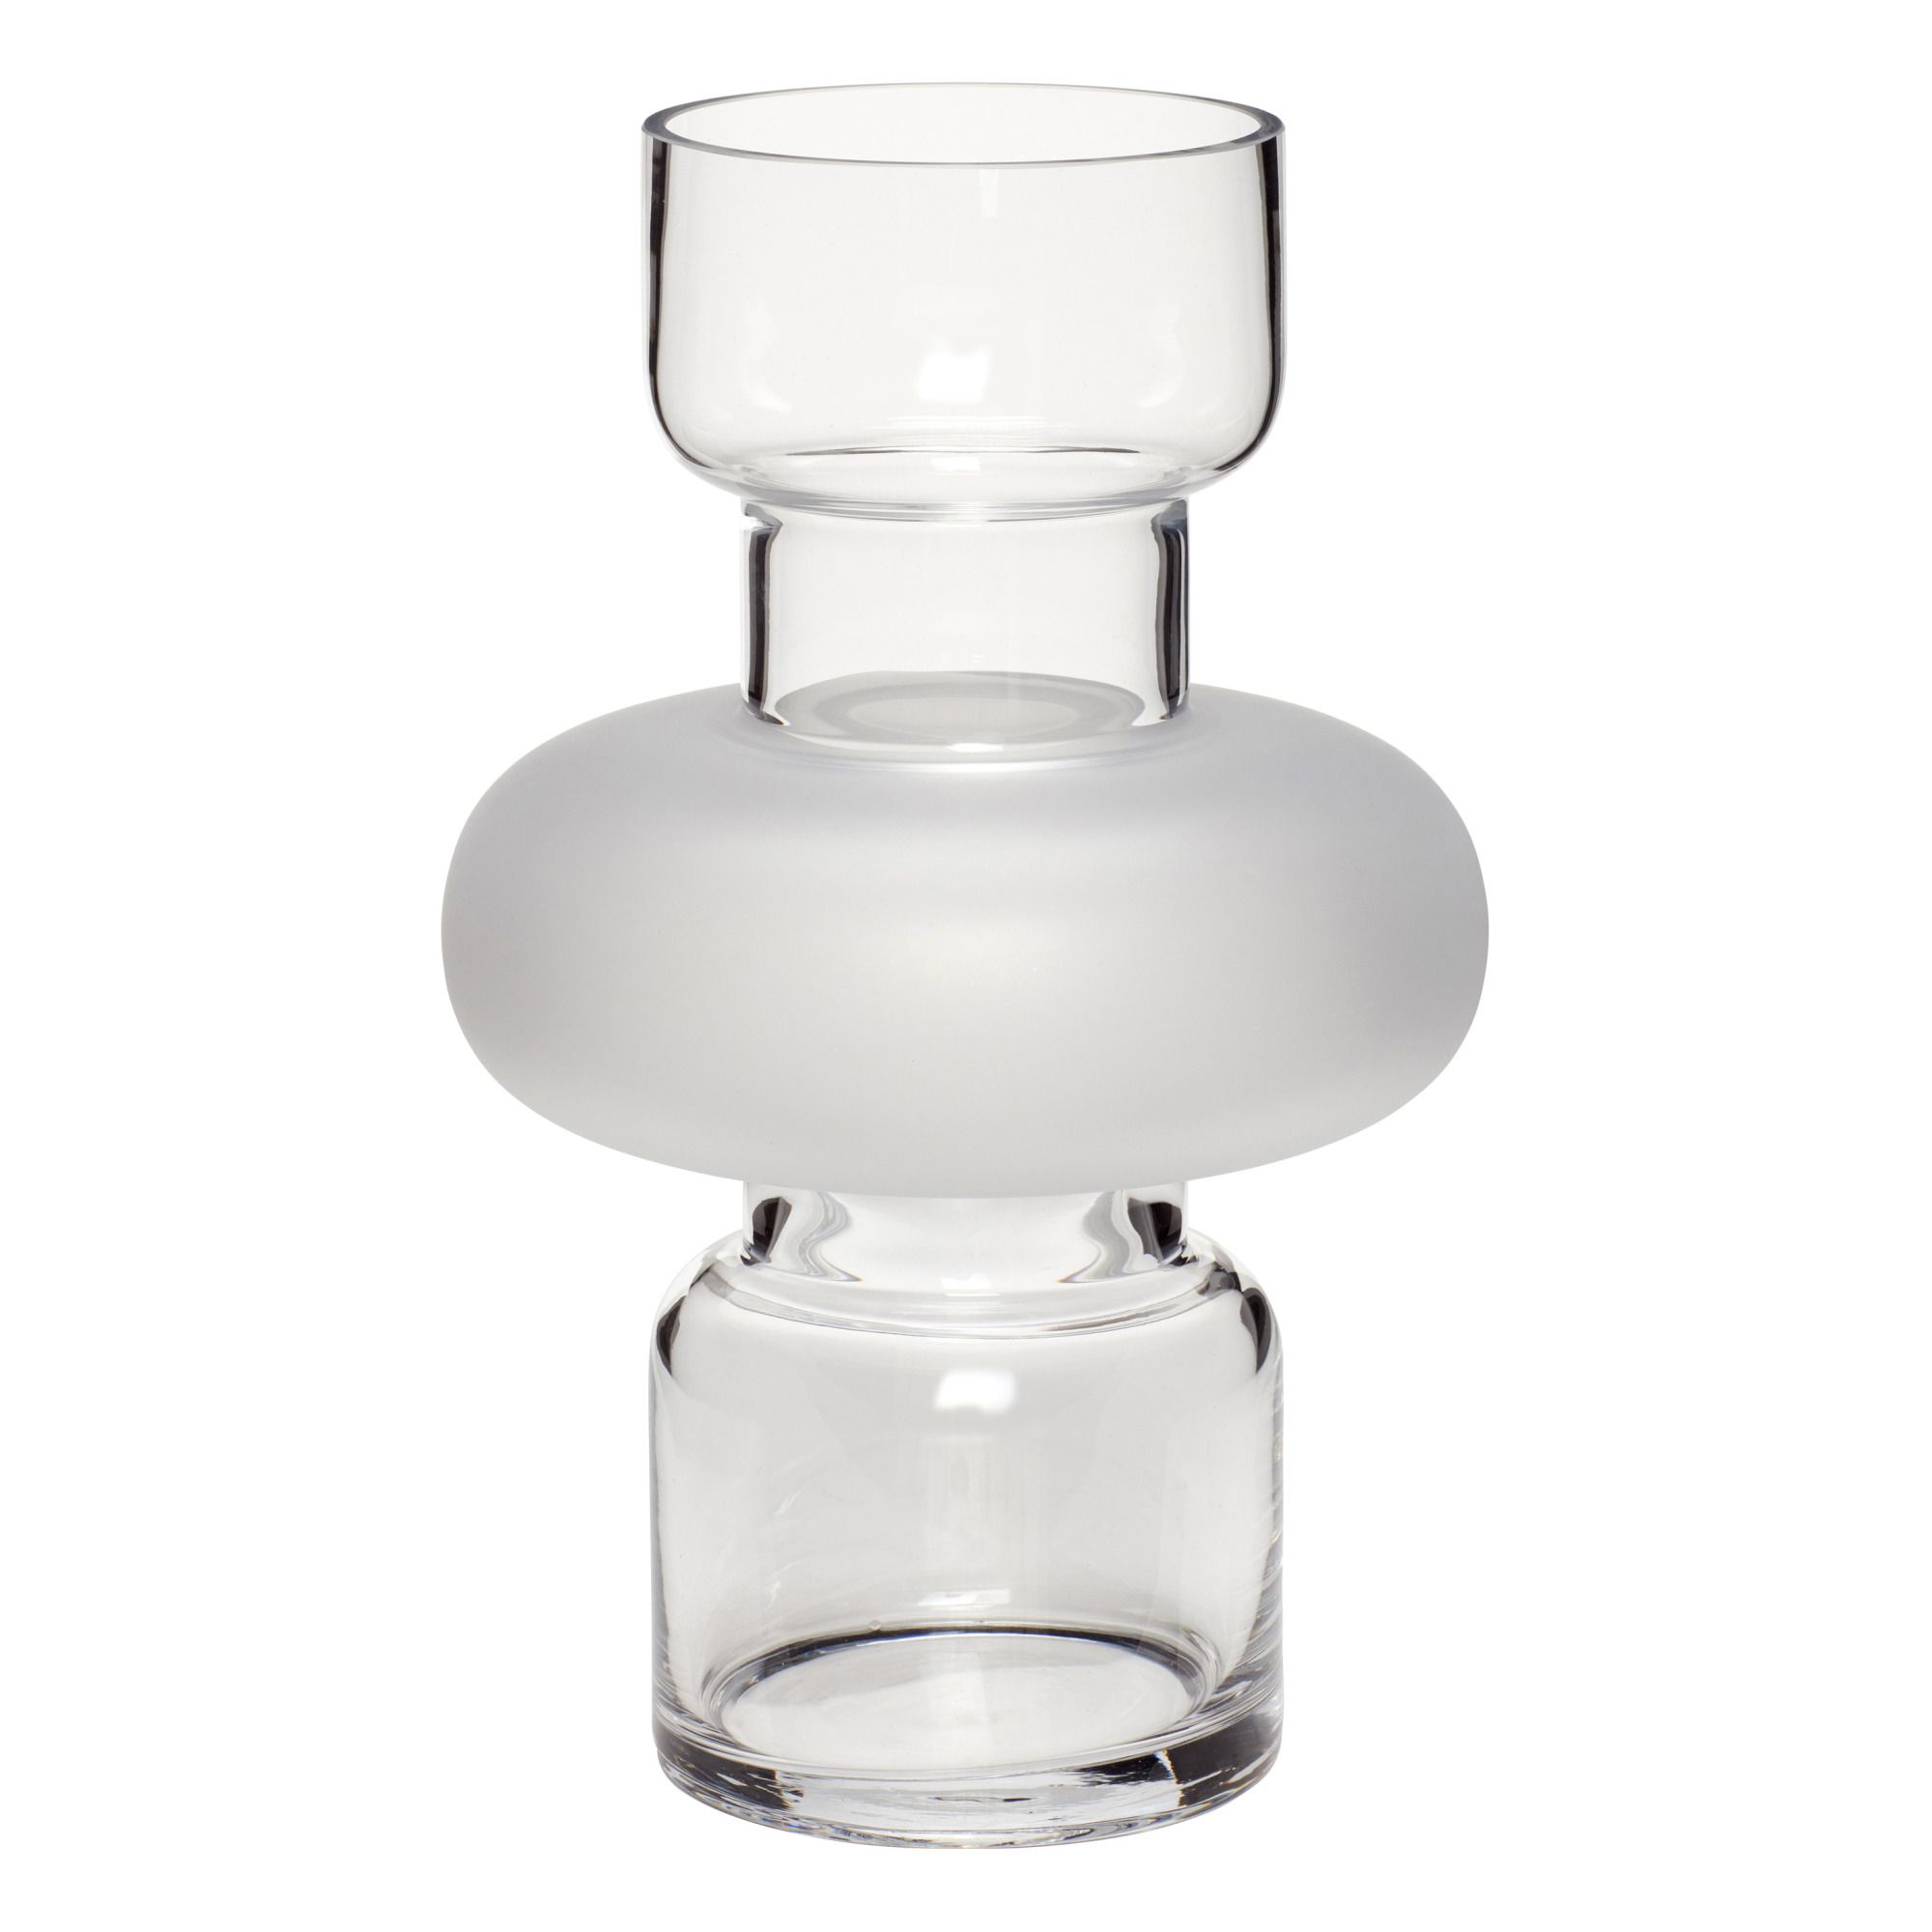 Hubsch - Vase en verre - Transparent